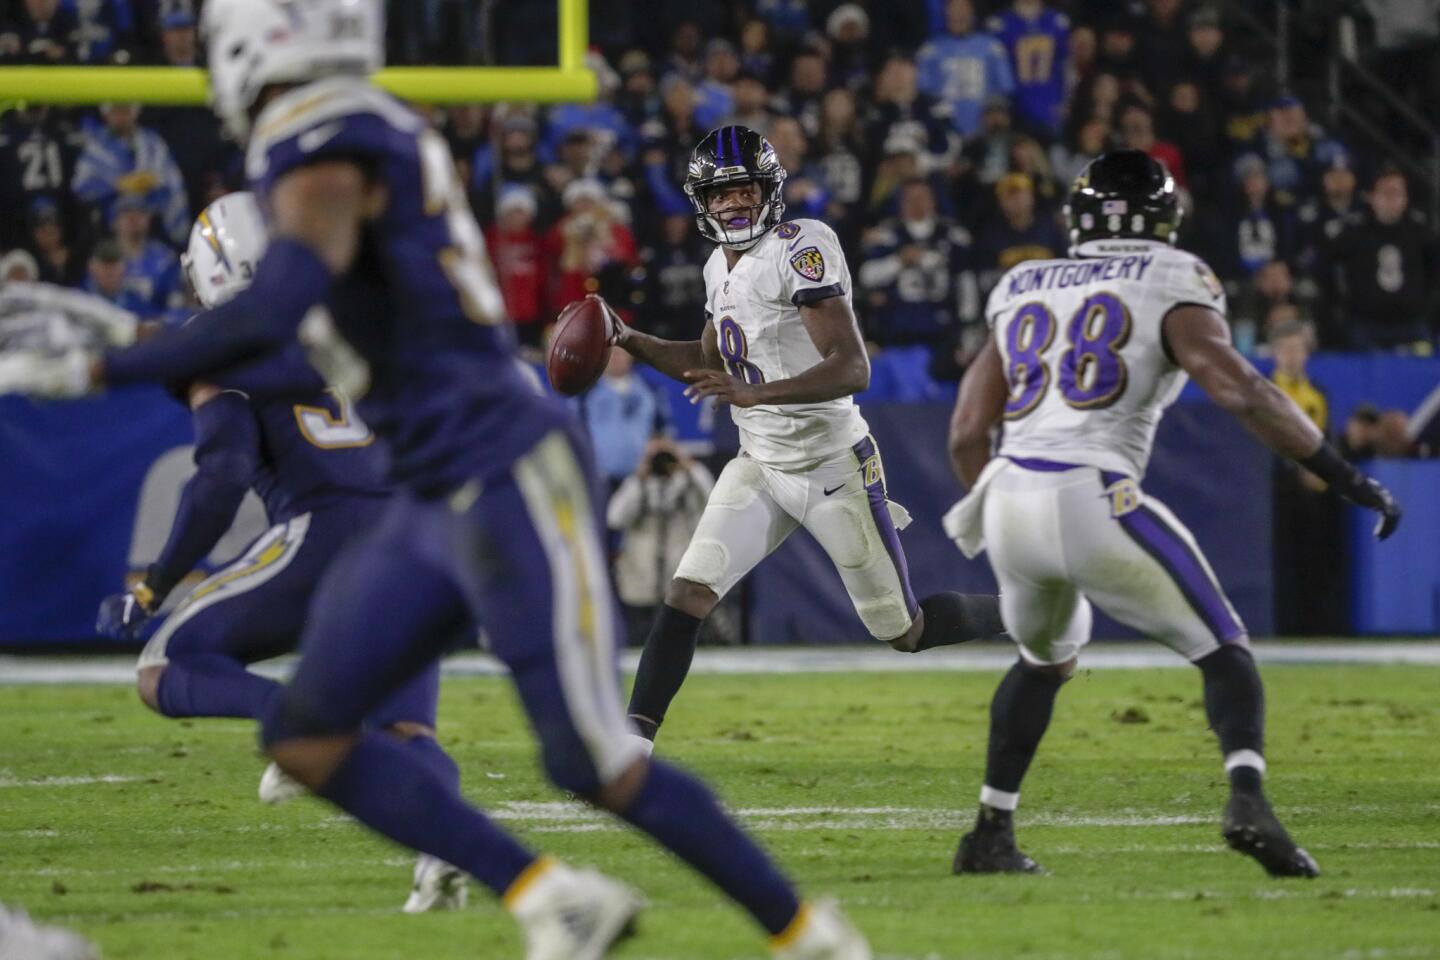 Ravens quarterback Lamar Jackson scrambles away from pressure during a second quarter drive at StubHub Center.